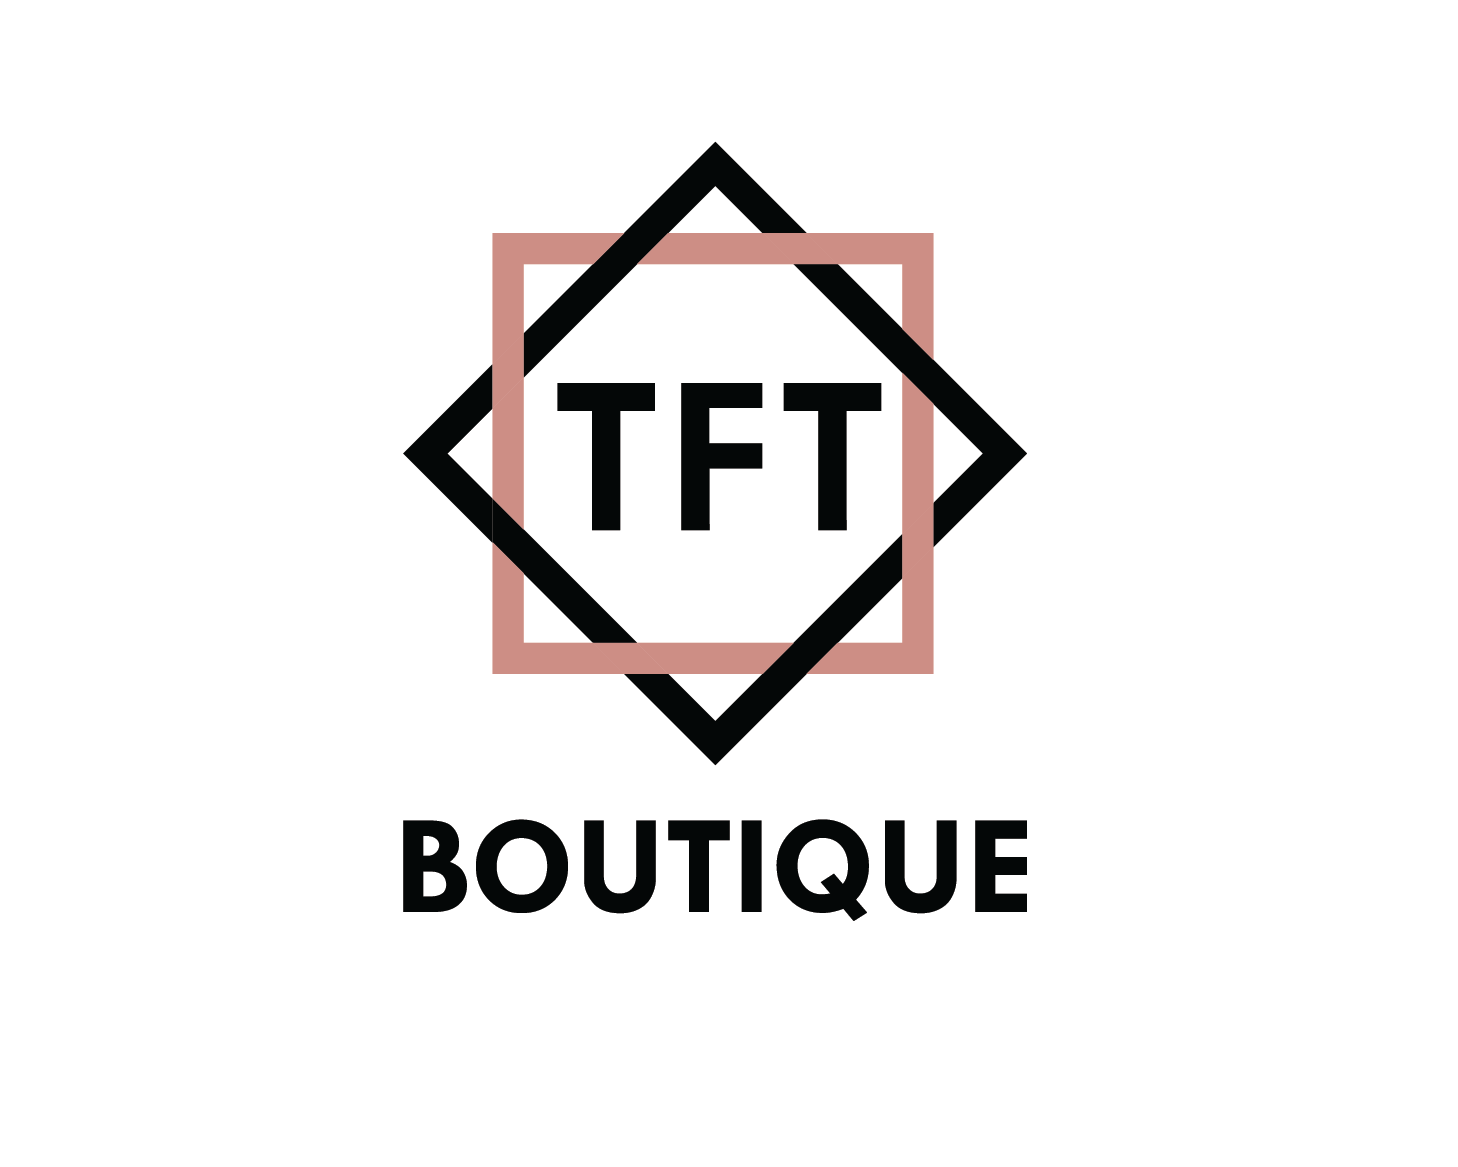 TFT Logo - Upmarket, Bold, Retail Logo Design for TFT Boutique by Positive_Vibe ...